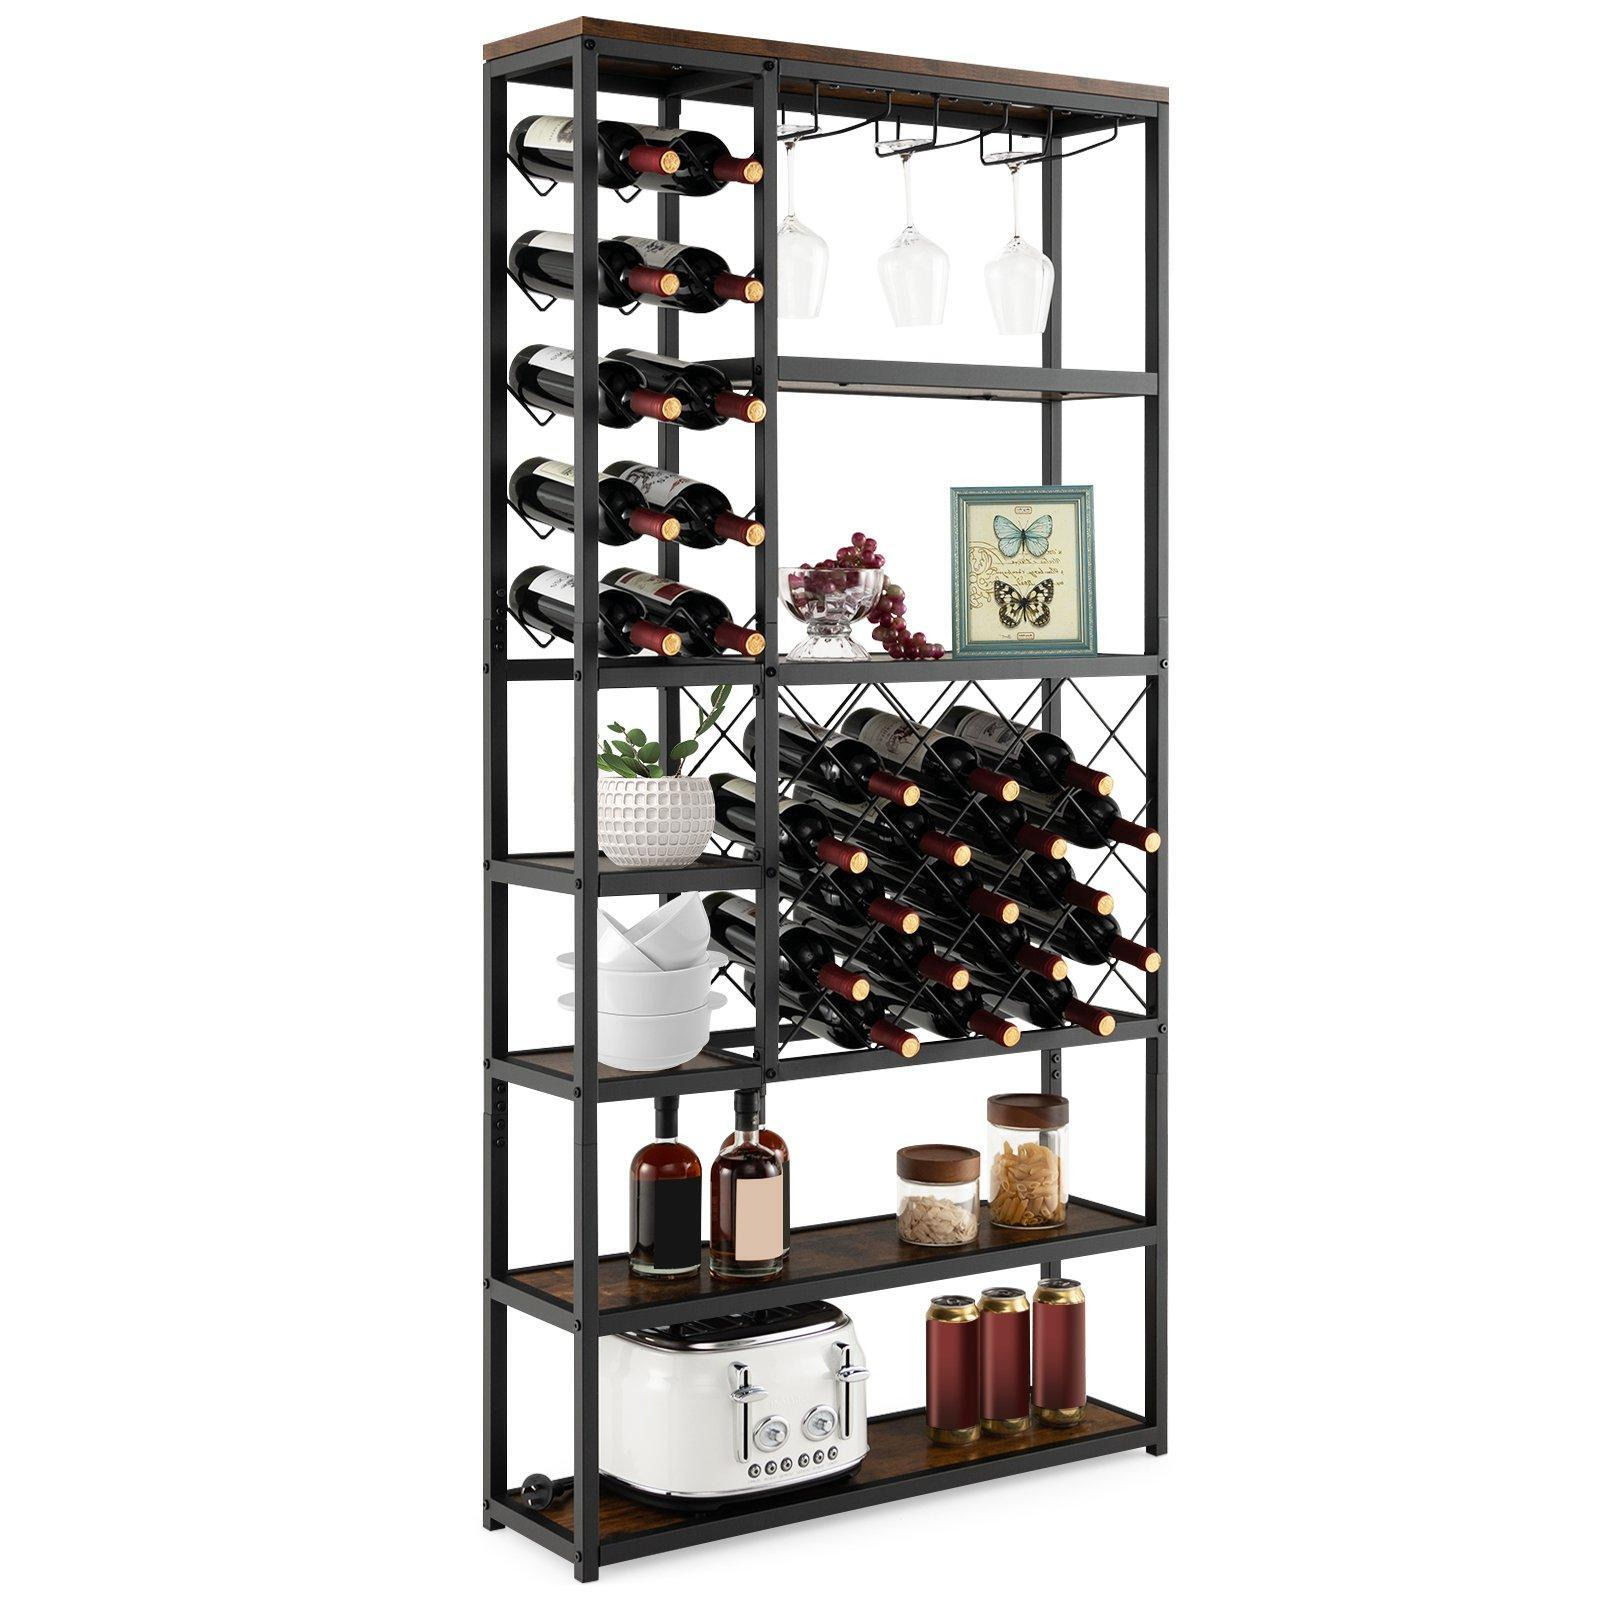 ndustrial Floor Wine Rack Freestanding Wine Display Shelf w/ Glass Holders - image 1